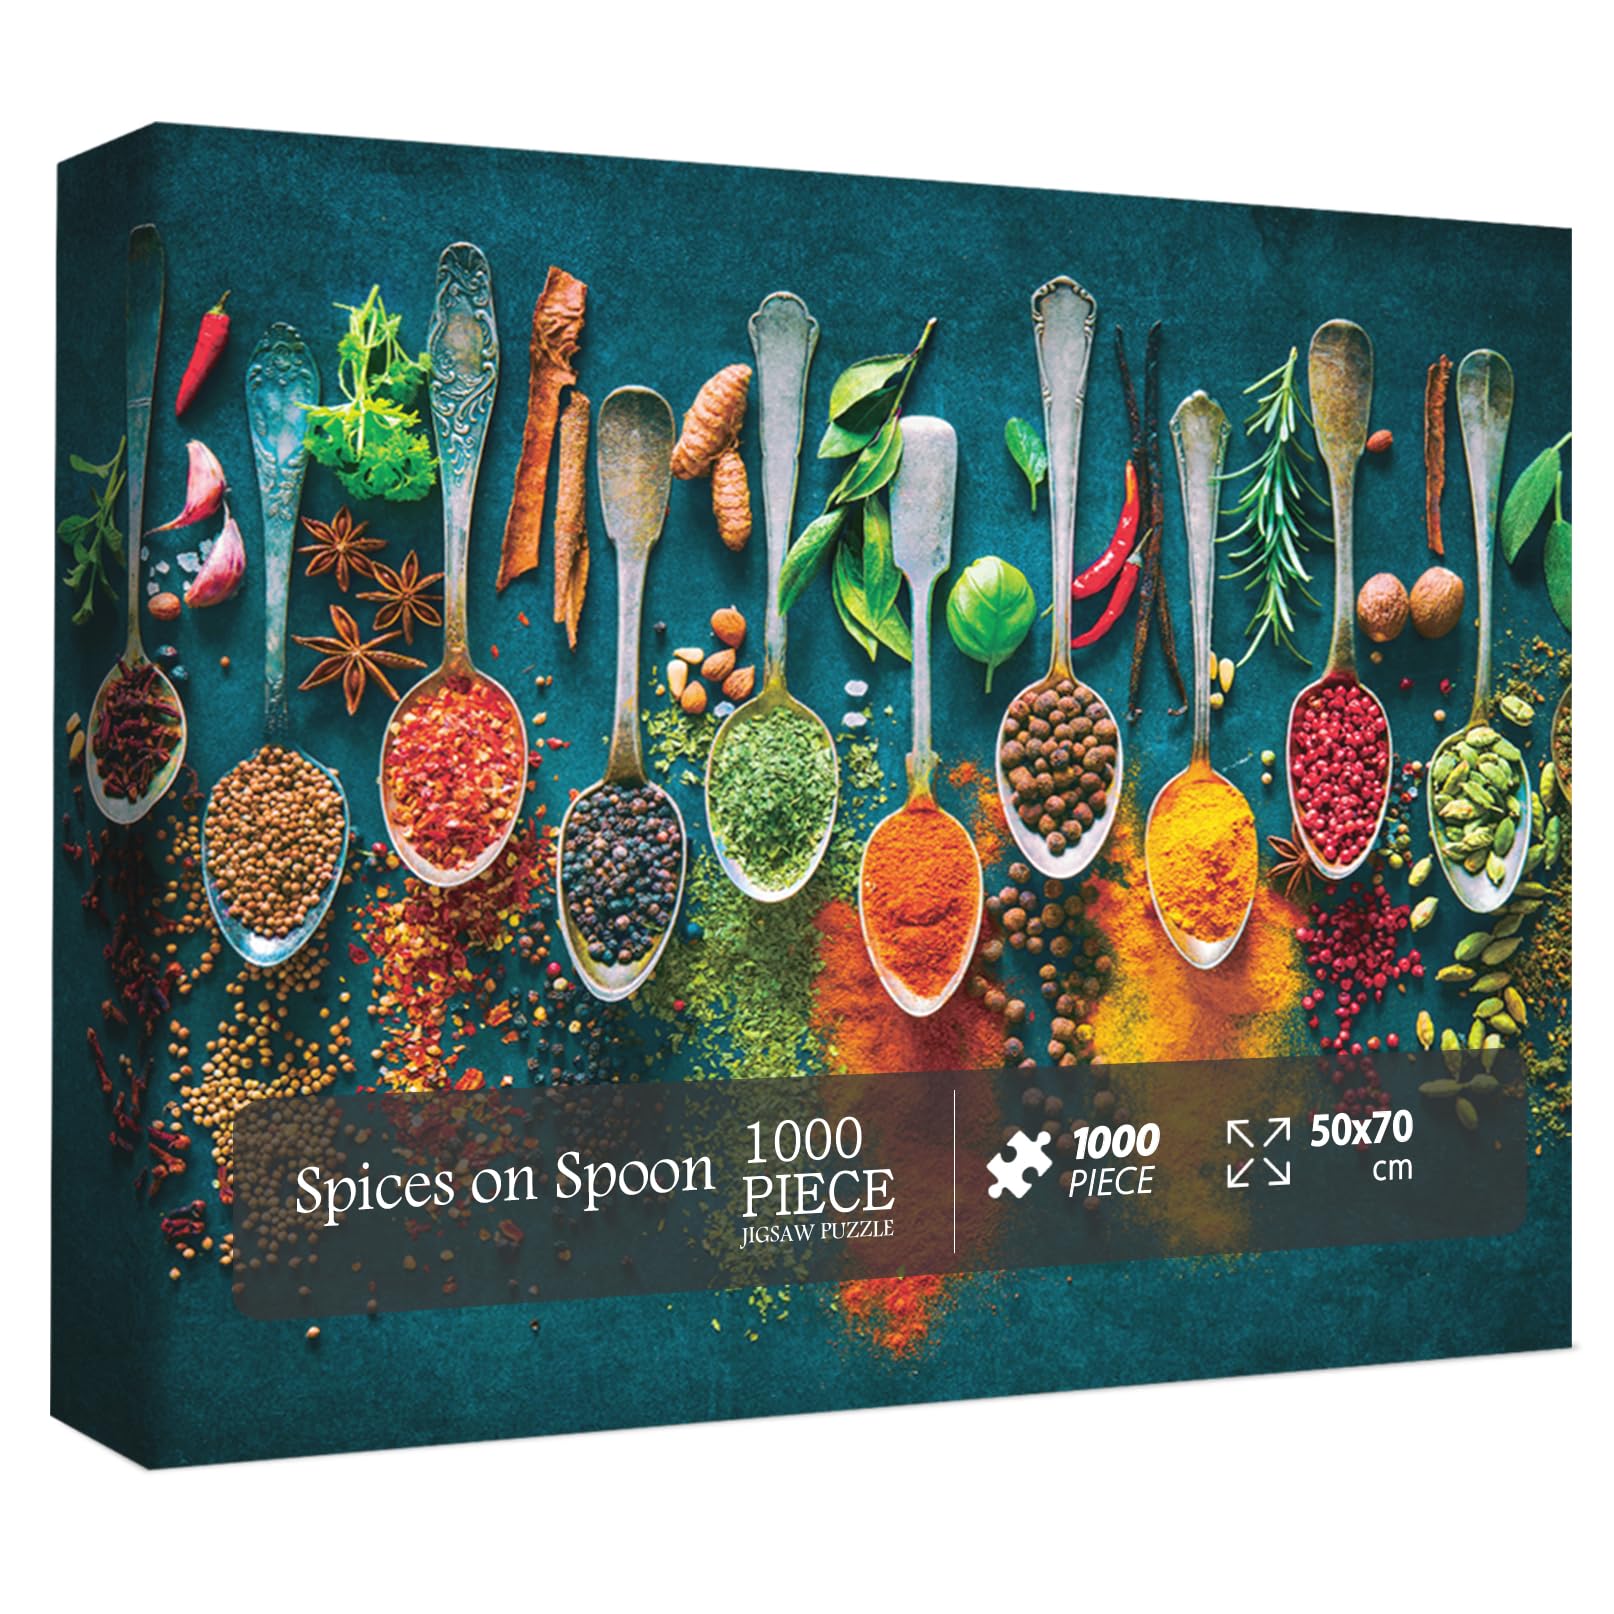 Bboldin® Spice Spoon Jigsaw Puzzle 1000 Pieces - Spice Spoon